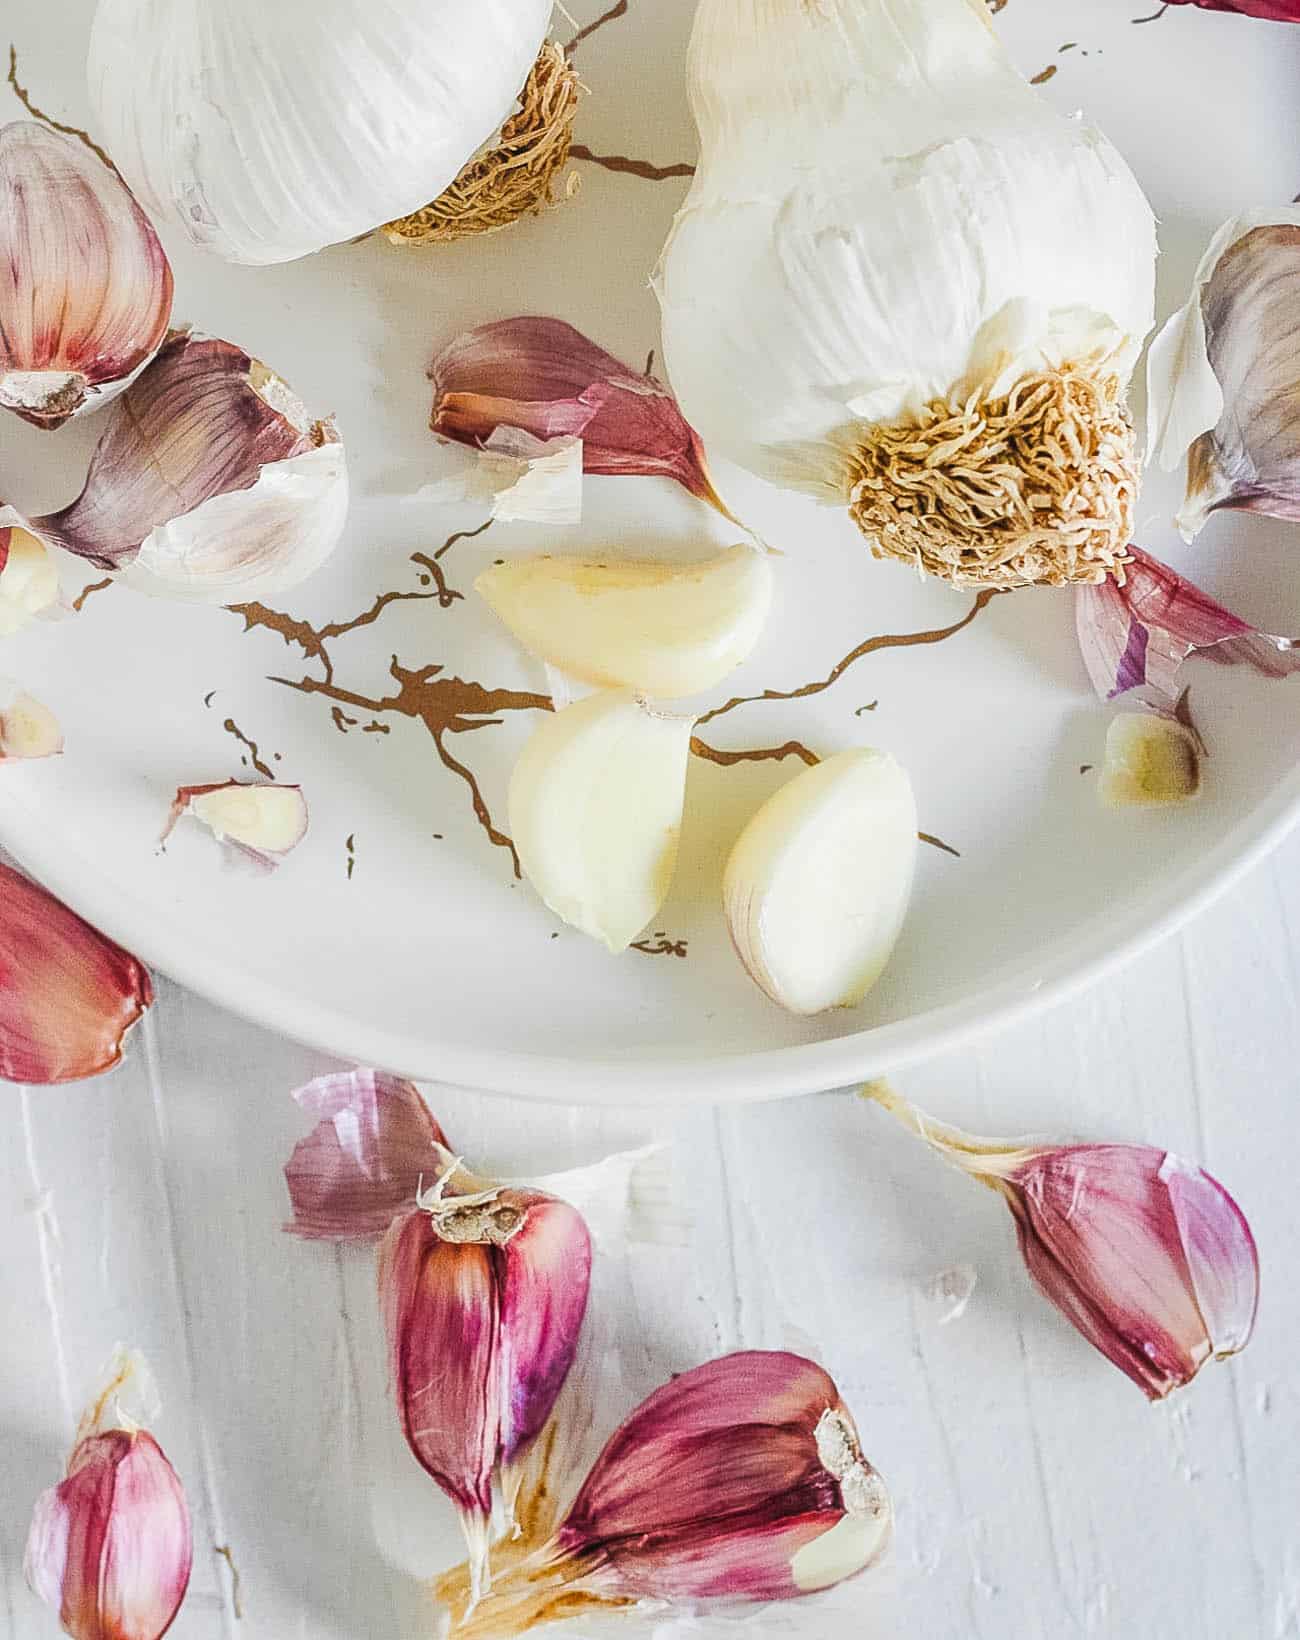 how to peel garlic easily - garlic peeling hack